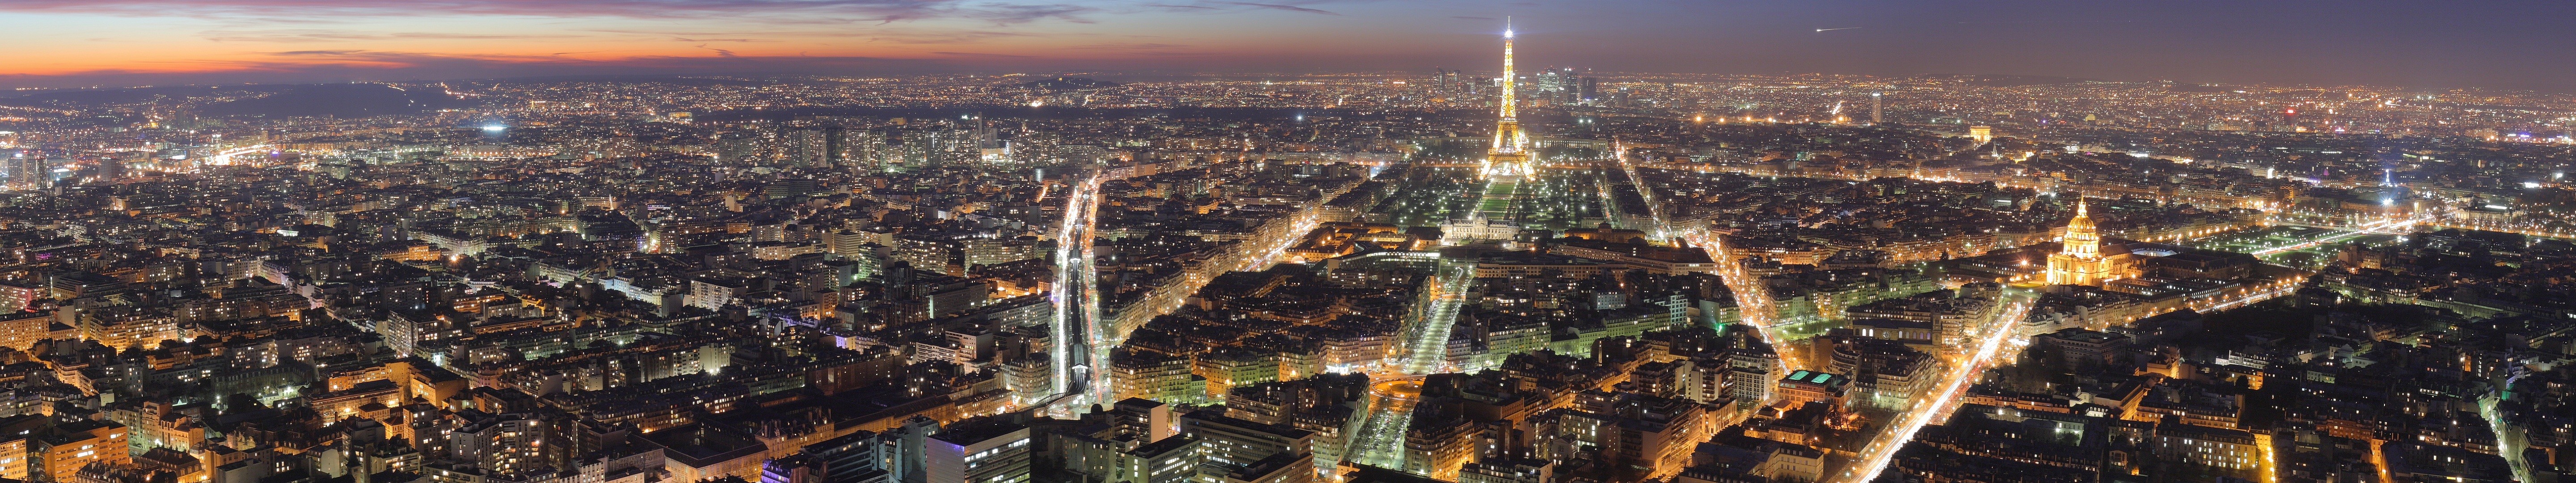 General 5760x1080 Paris Eiffel Tower night triple screen France cityscape